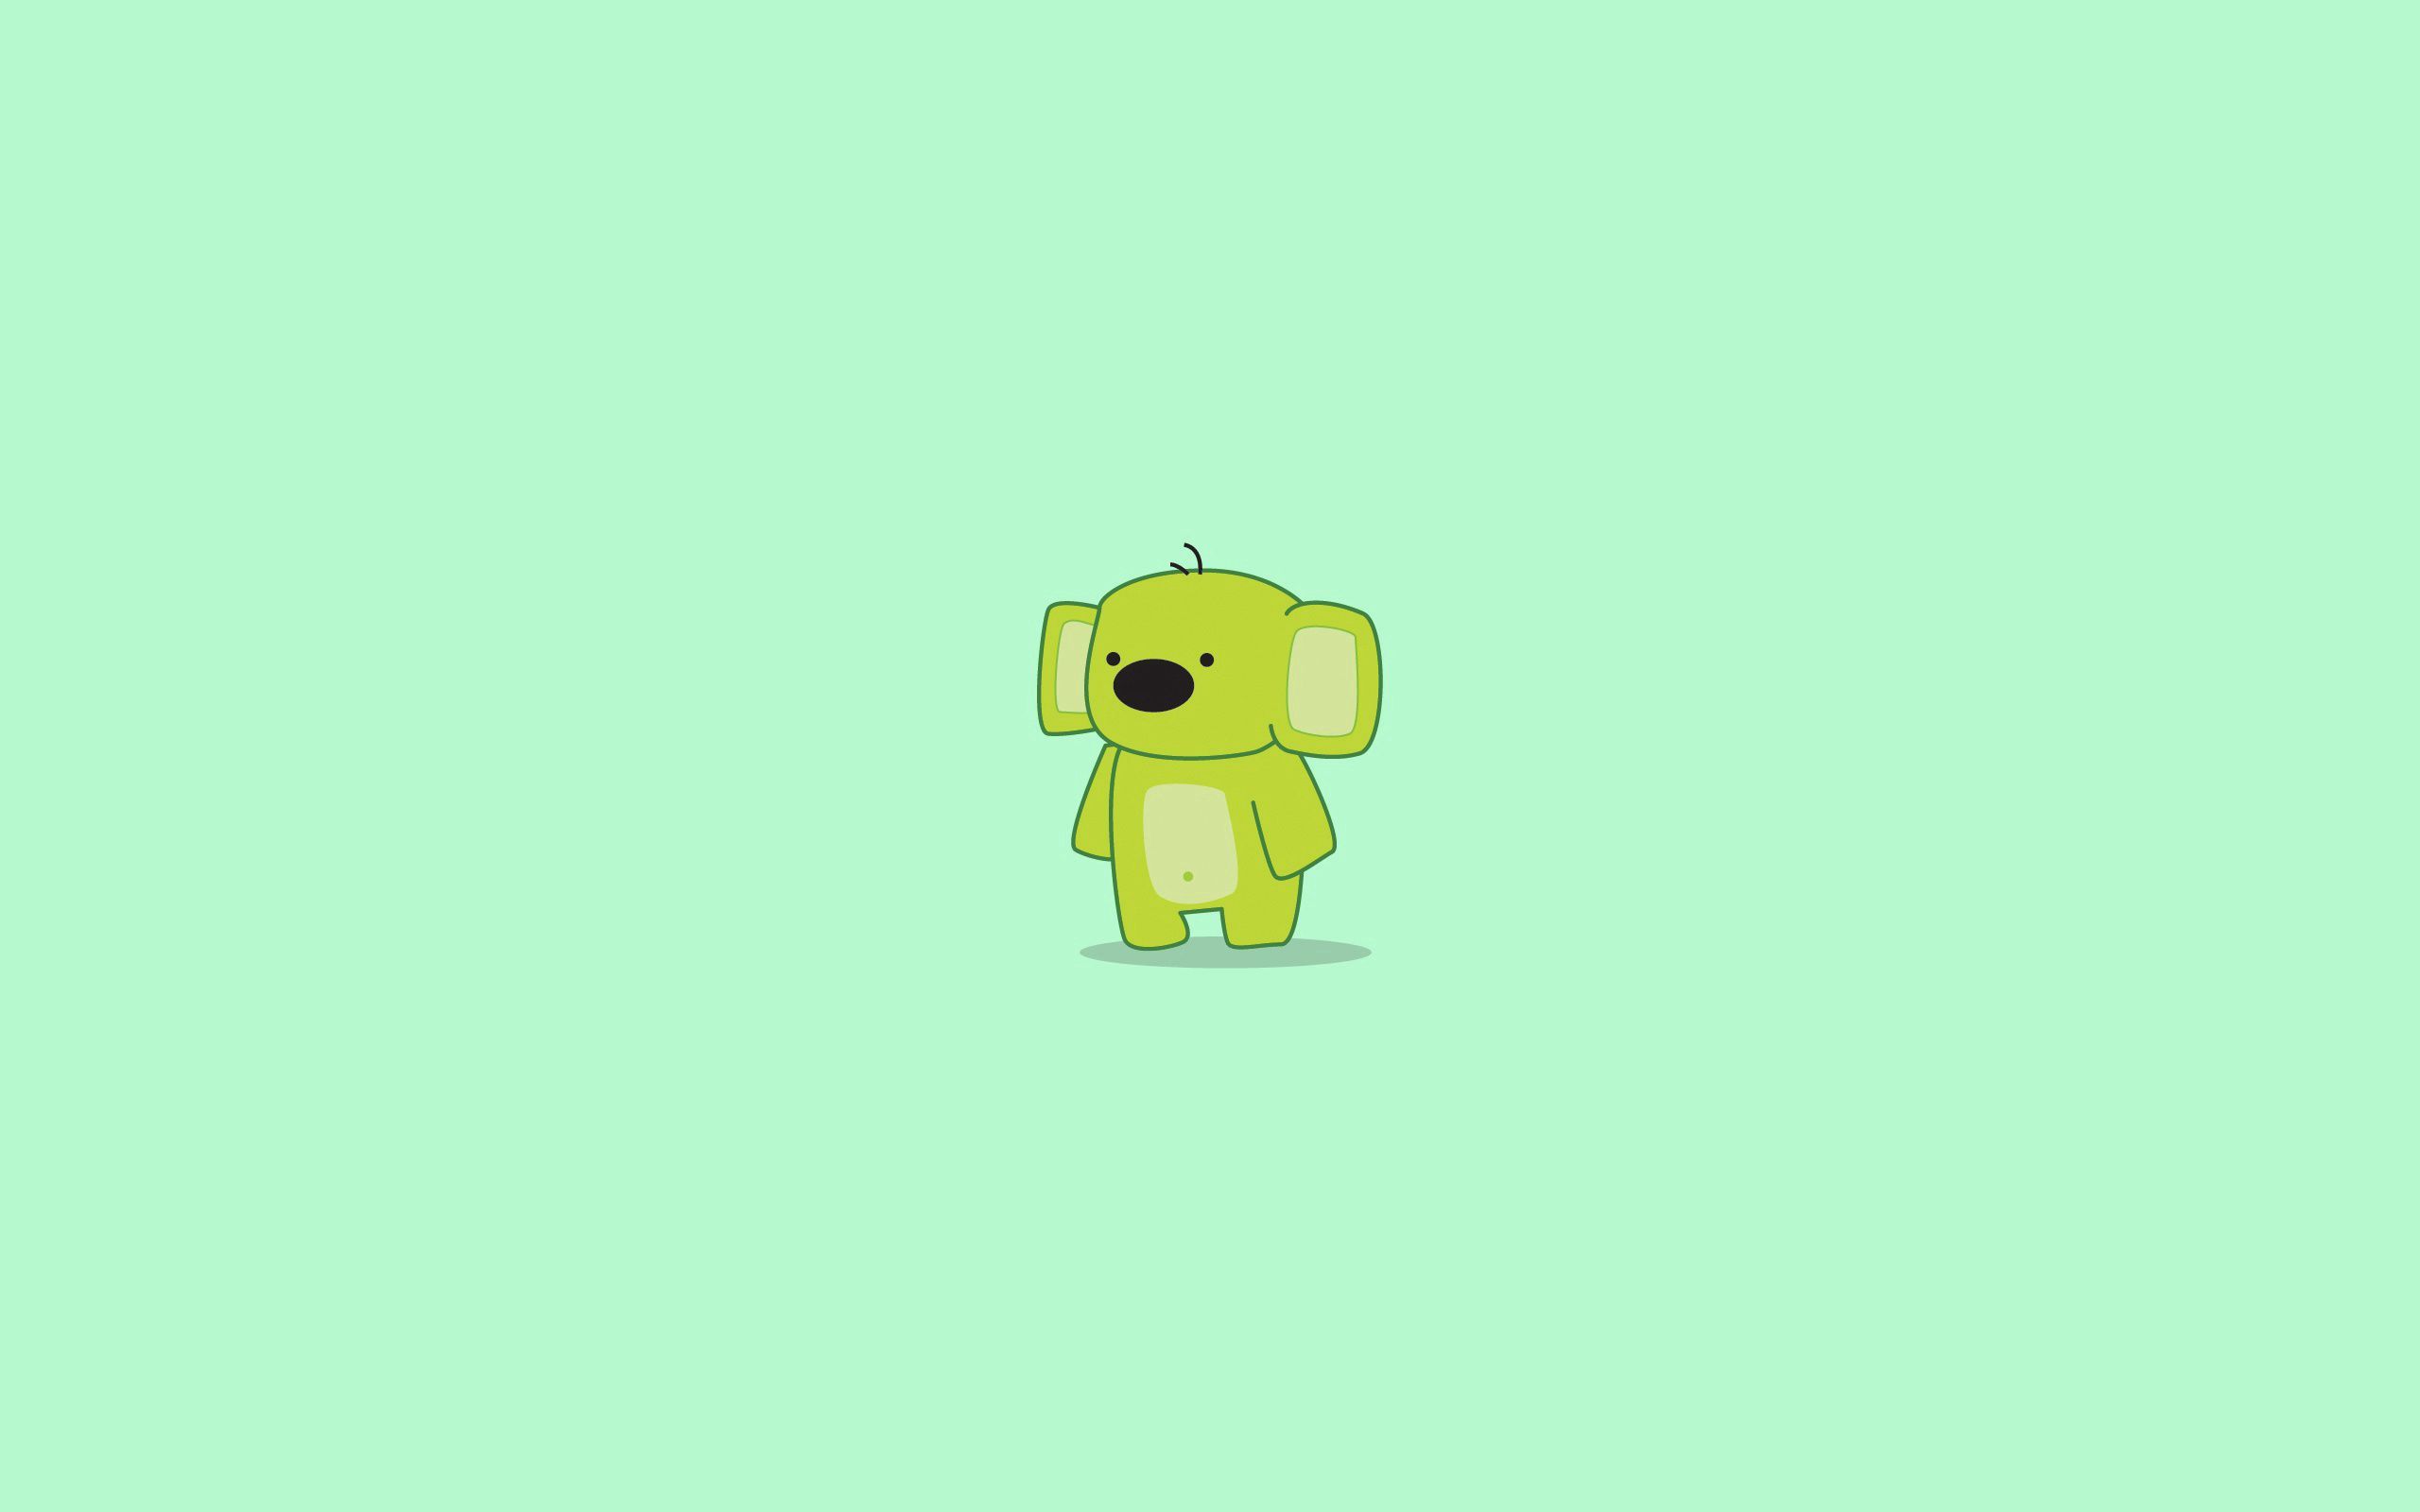 83009 descargar imagen vector, luz, imagen, dibujo, de color claro, coala, koala: fondos de pantalla y protectores de pantalla gratis